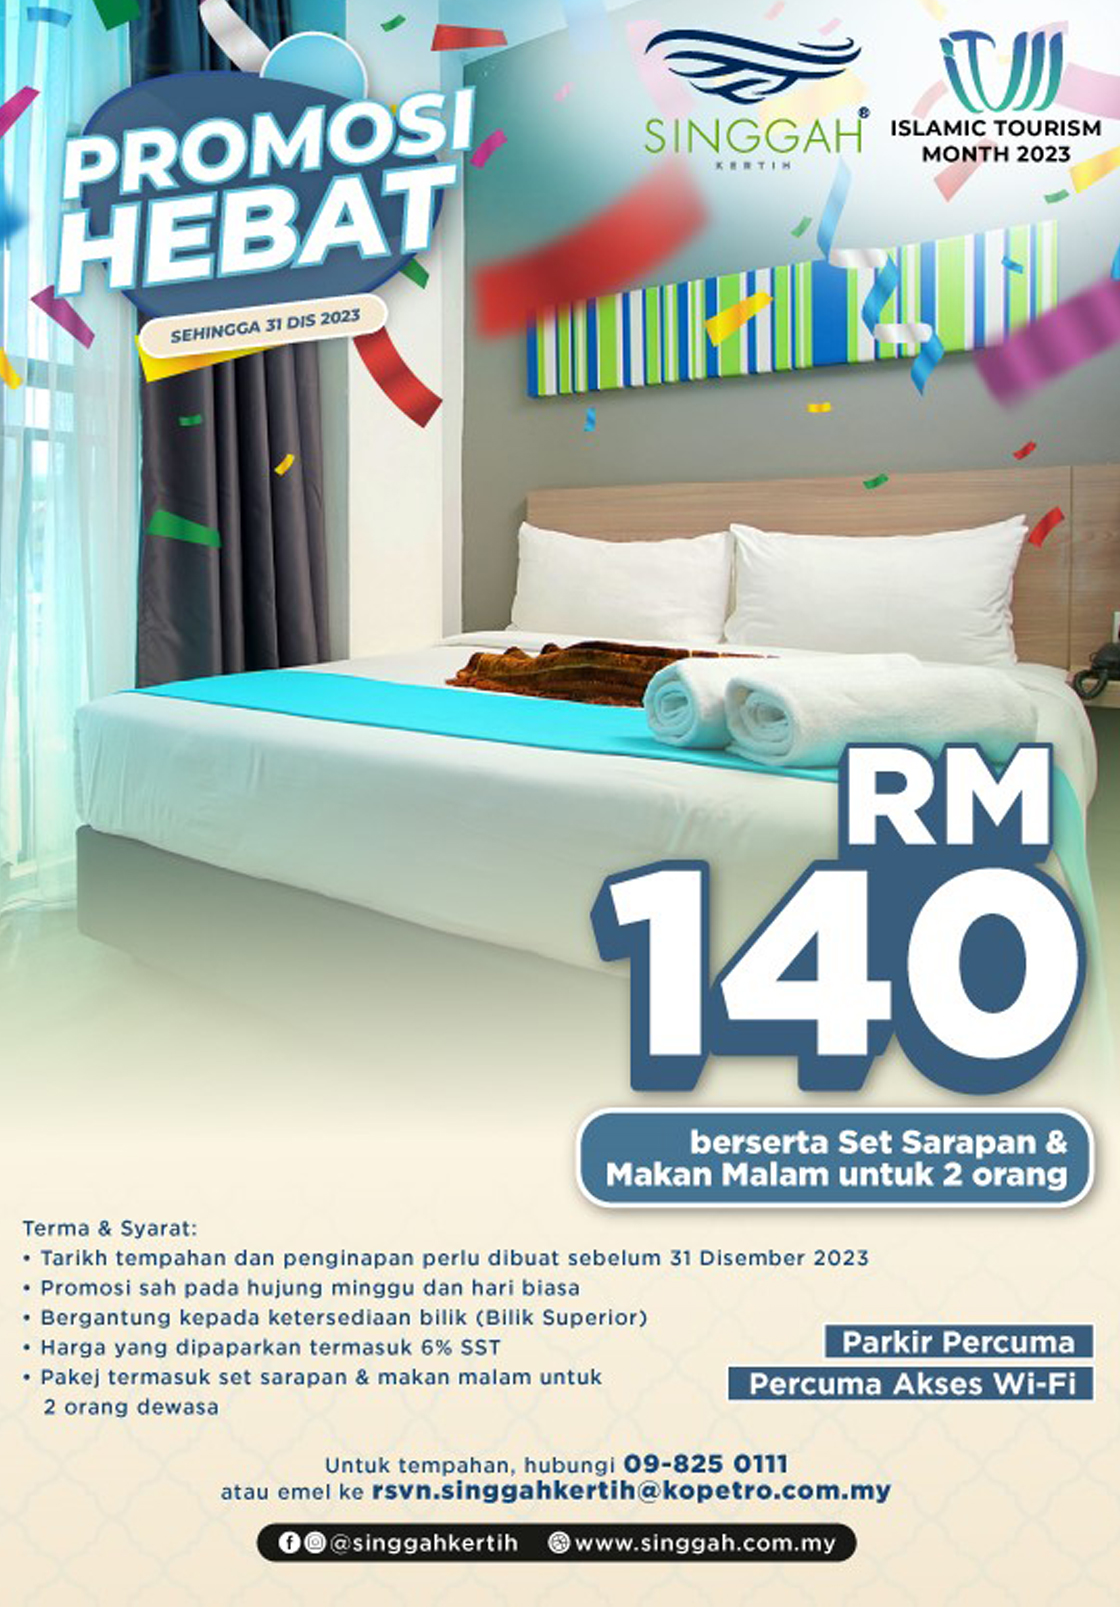 Kopetro Hotel & Resort Sdn Bhd